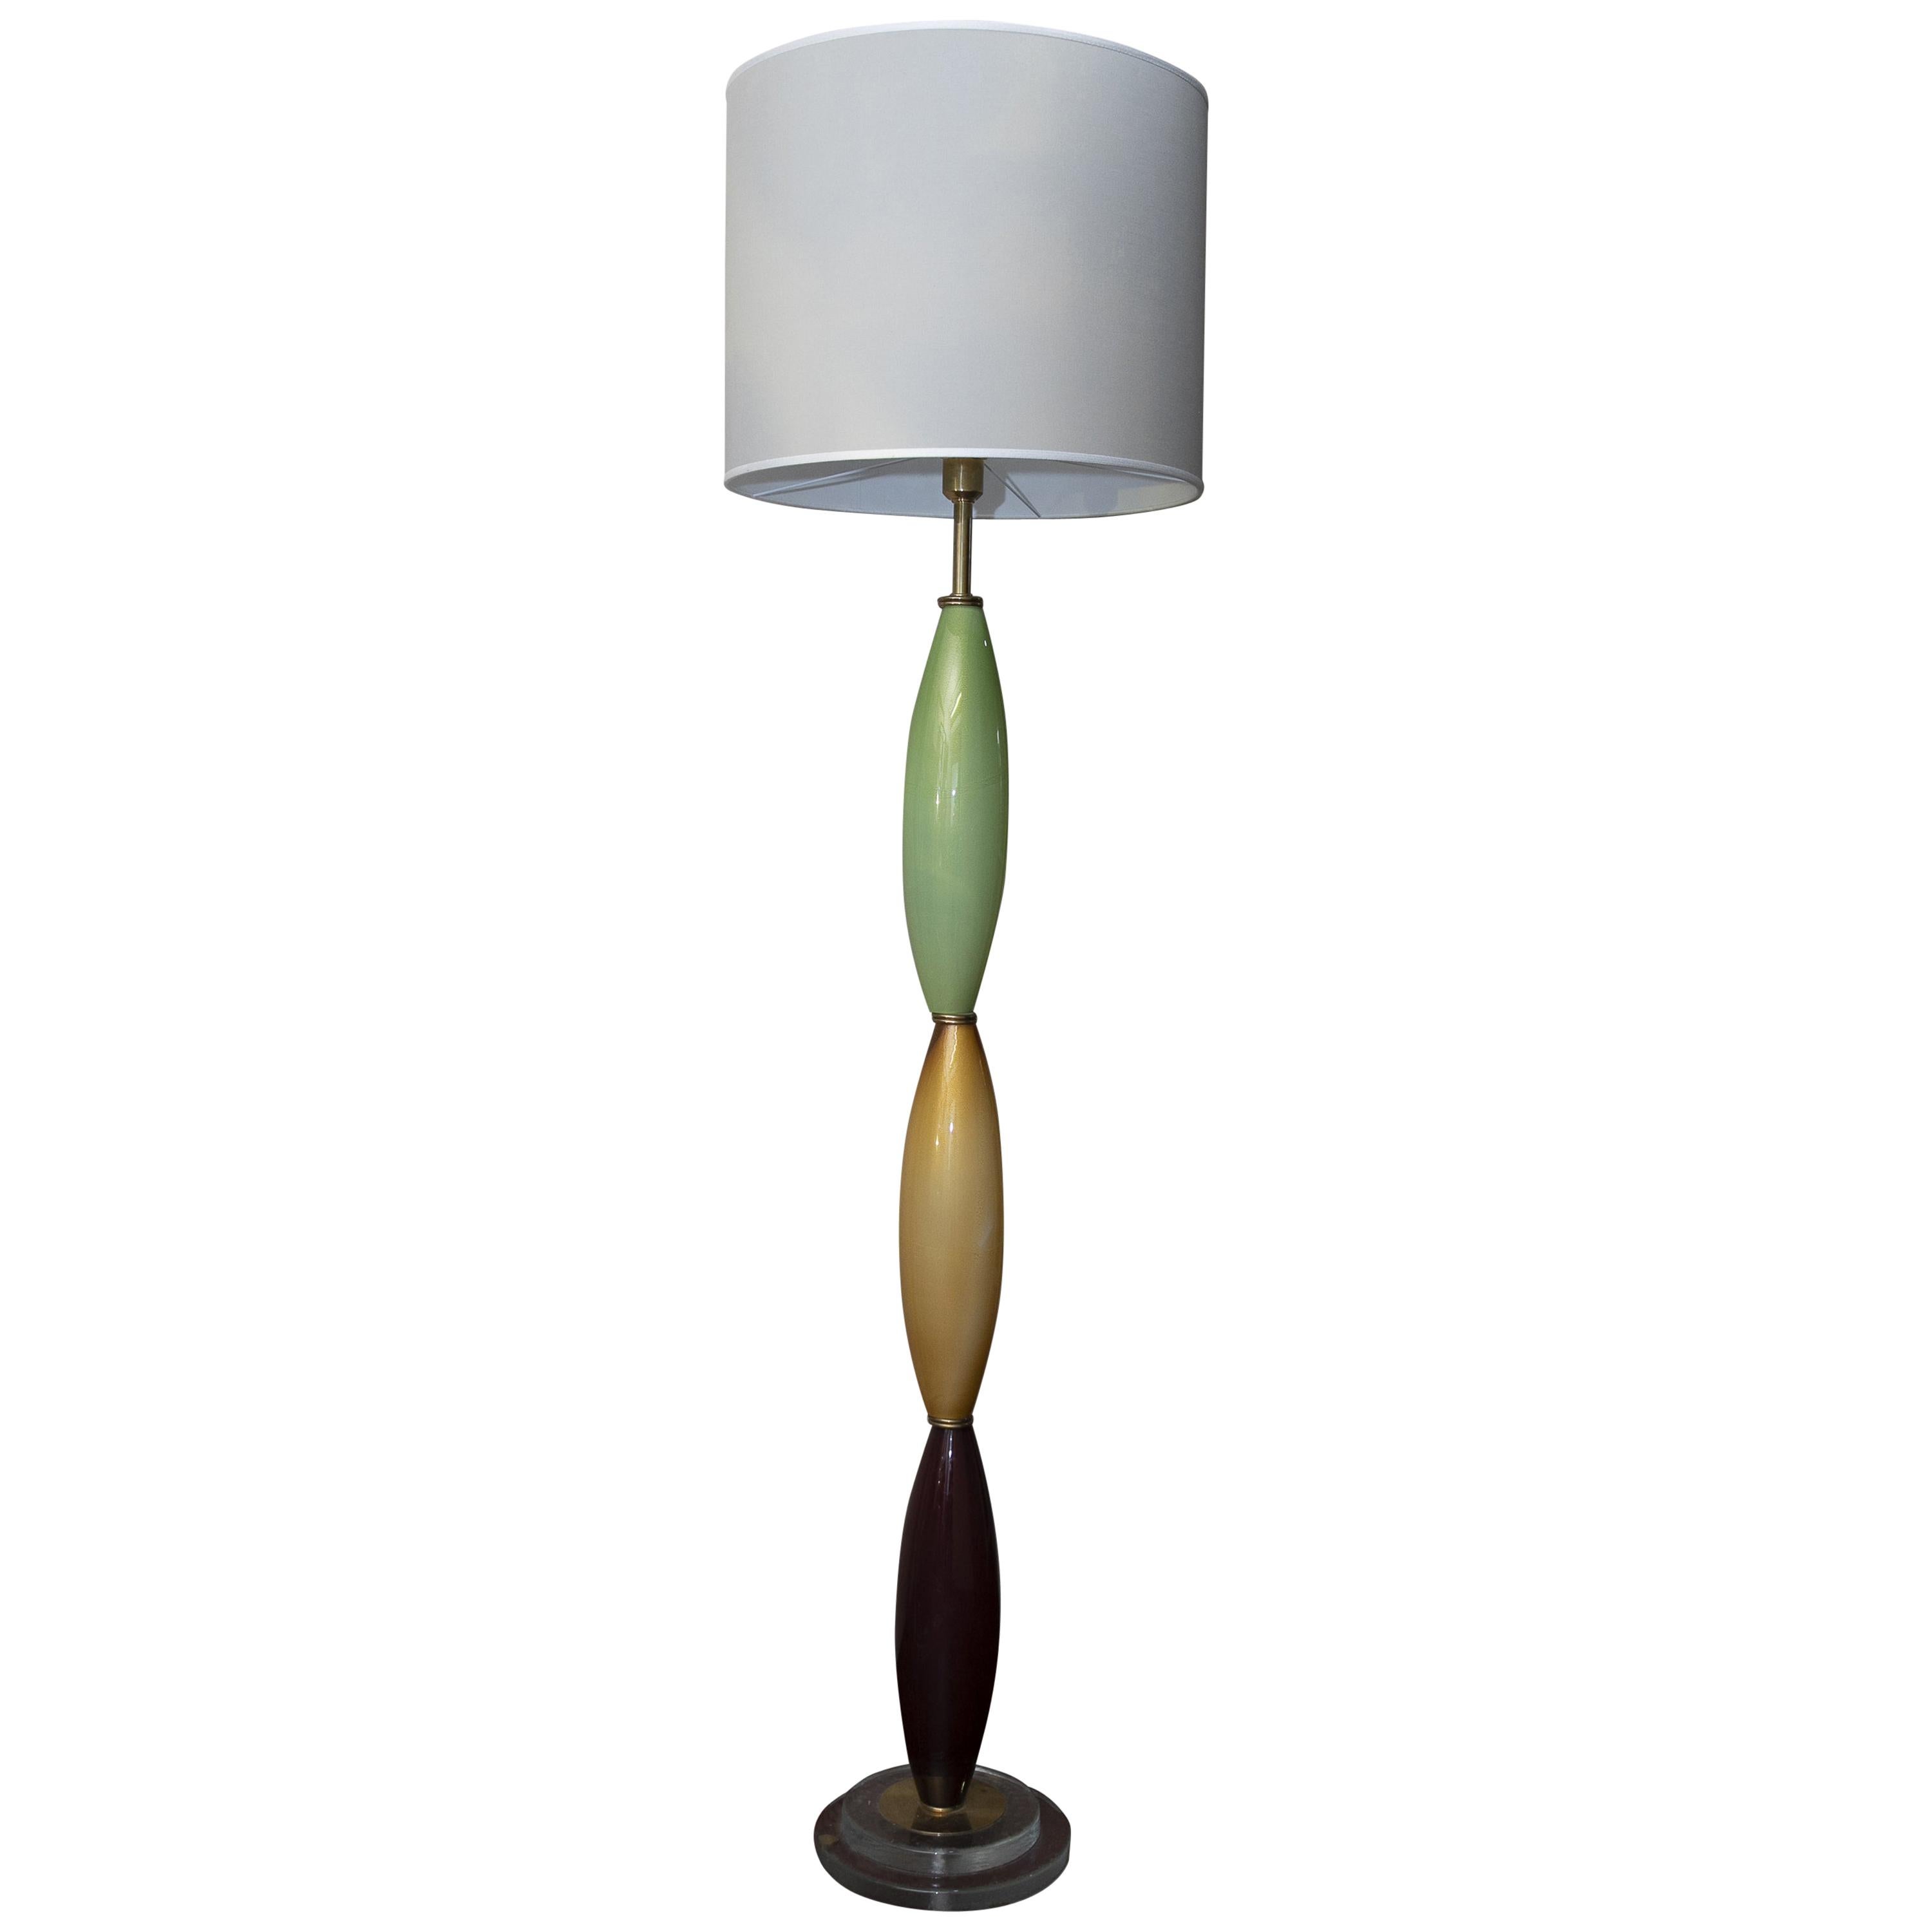 Floor Lamp in Venetian Glass, Handmade in Italy by Craftman, Recent Production